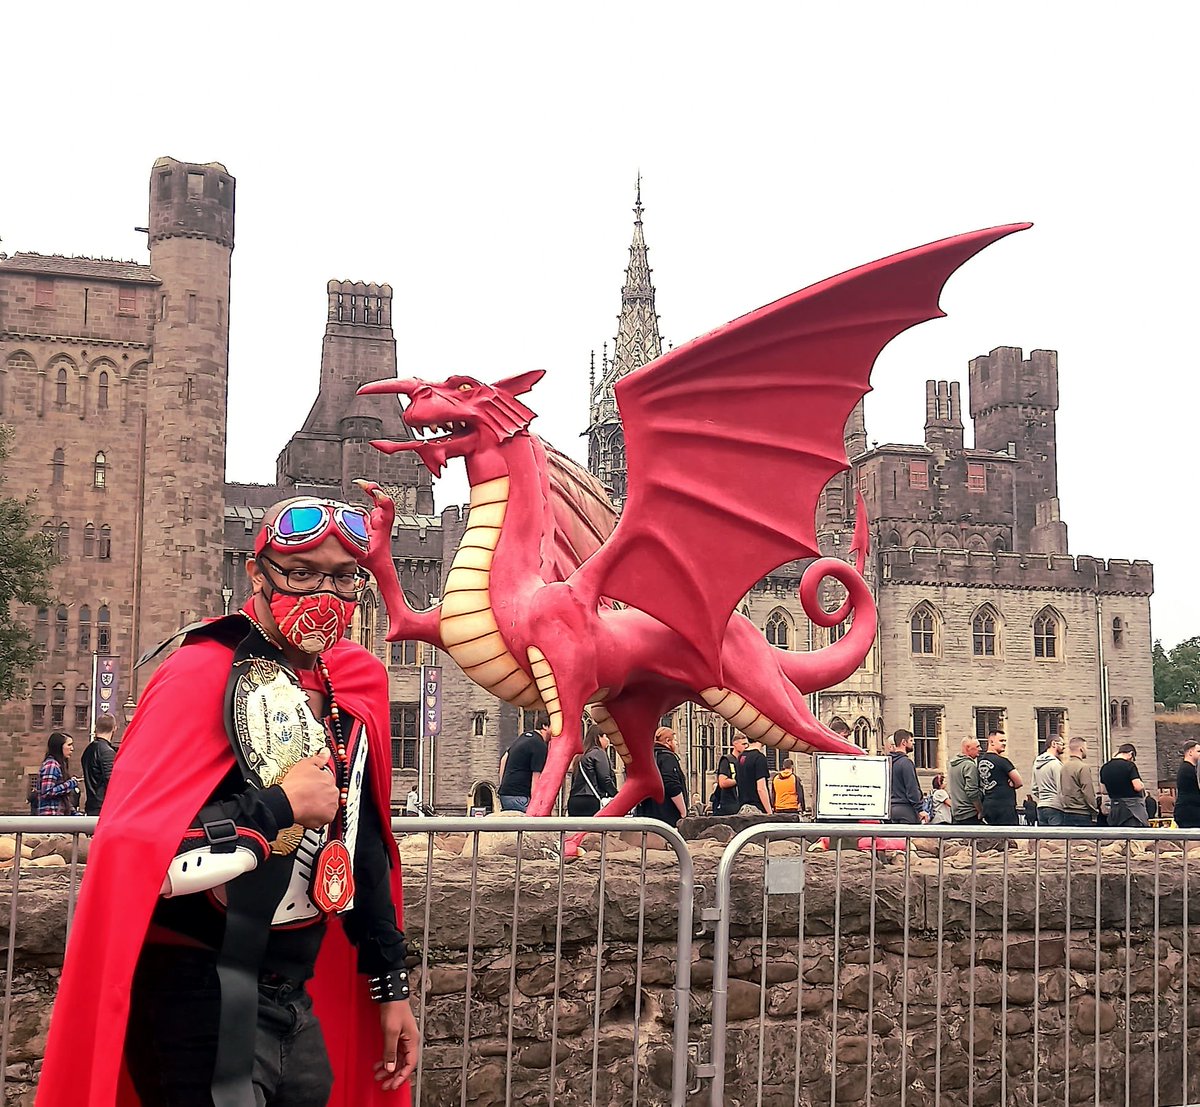 The Mighty Welsh Dragon, The Legend Continues...!

#MrGrimezPoetWarrior #Cardiff #Wales #Cymru #WelshDragon #RedDragon #Dragon #UKCosplay #OriginalCharactorCosplay #Imaginative #Year2022 #SouthWales #CardiffCastle #Castle #SciFiFantasy #TimeTravel #WarriorStyle